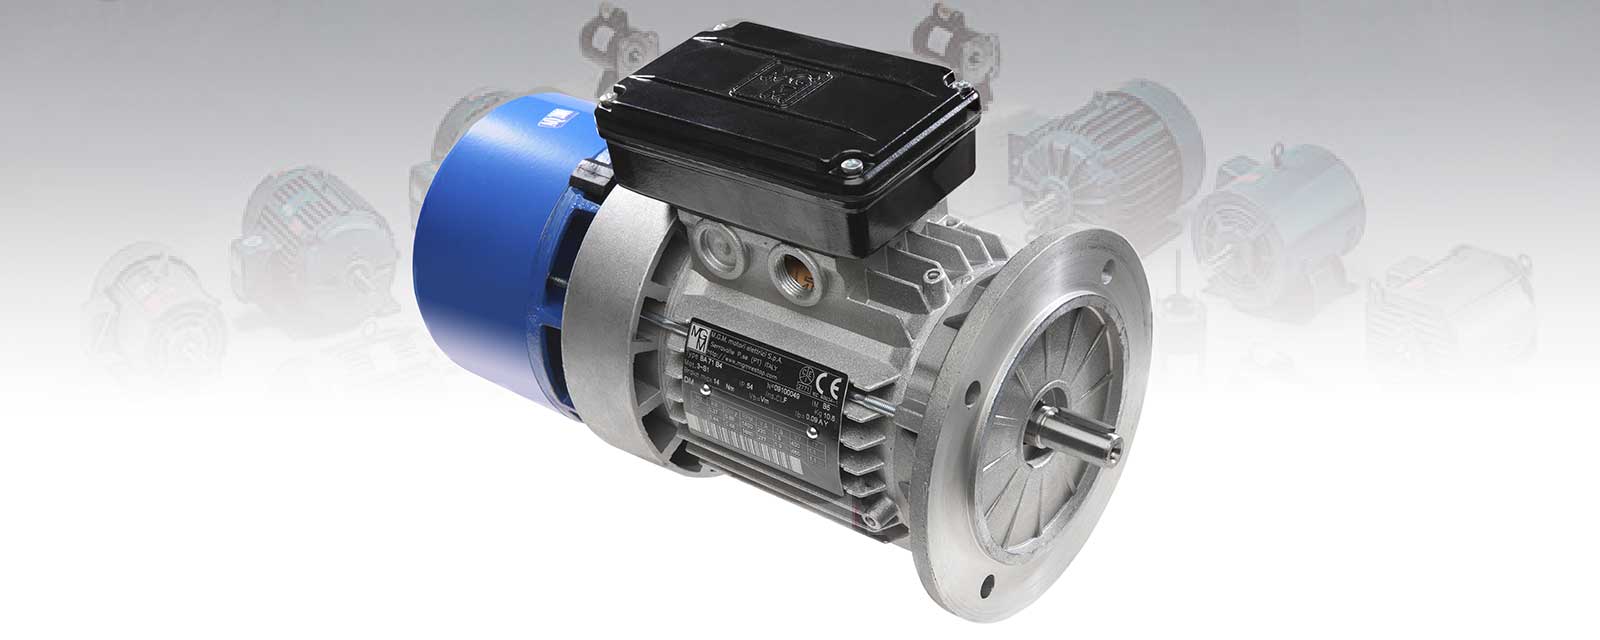 Motors - Wholesale distributor of small electric motors fot hobby